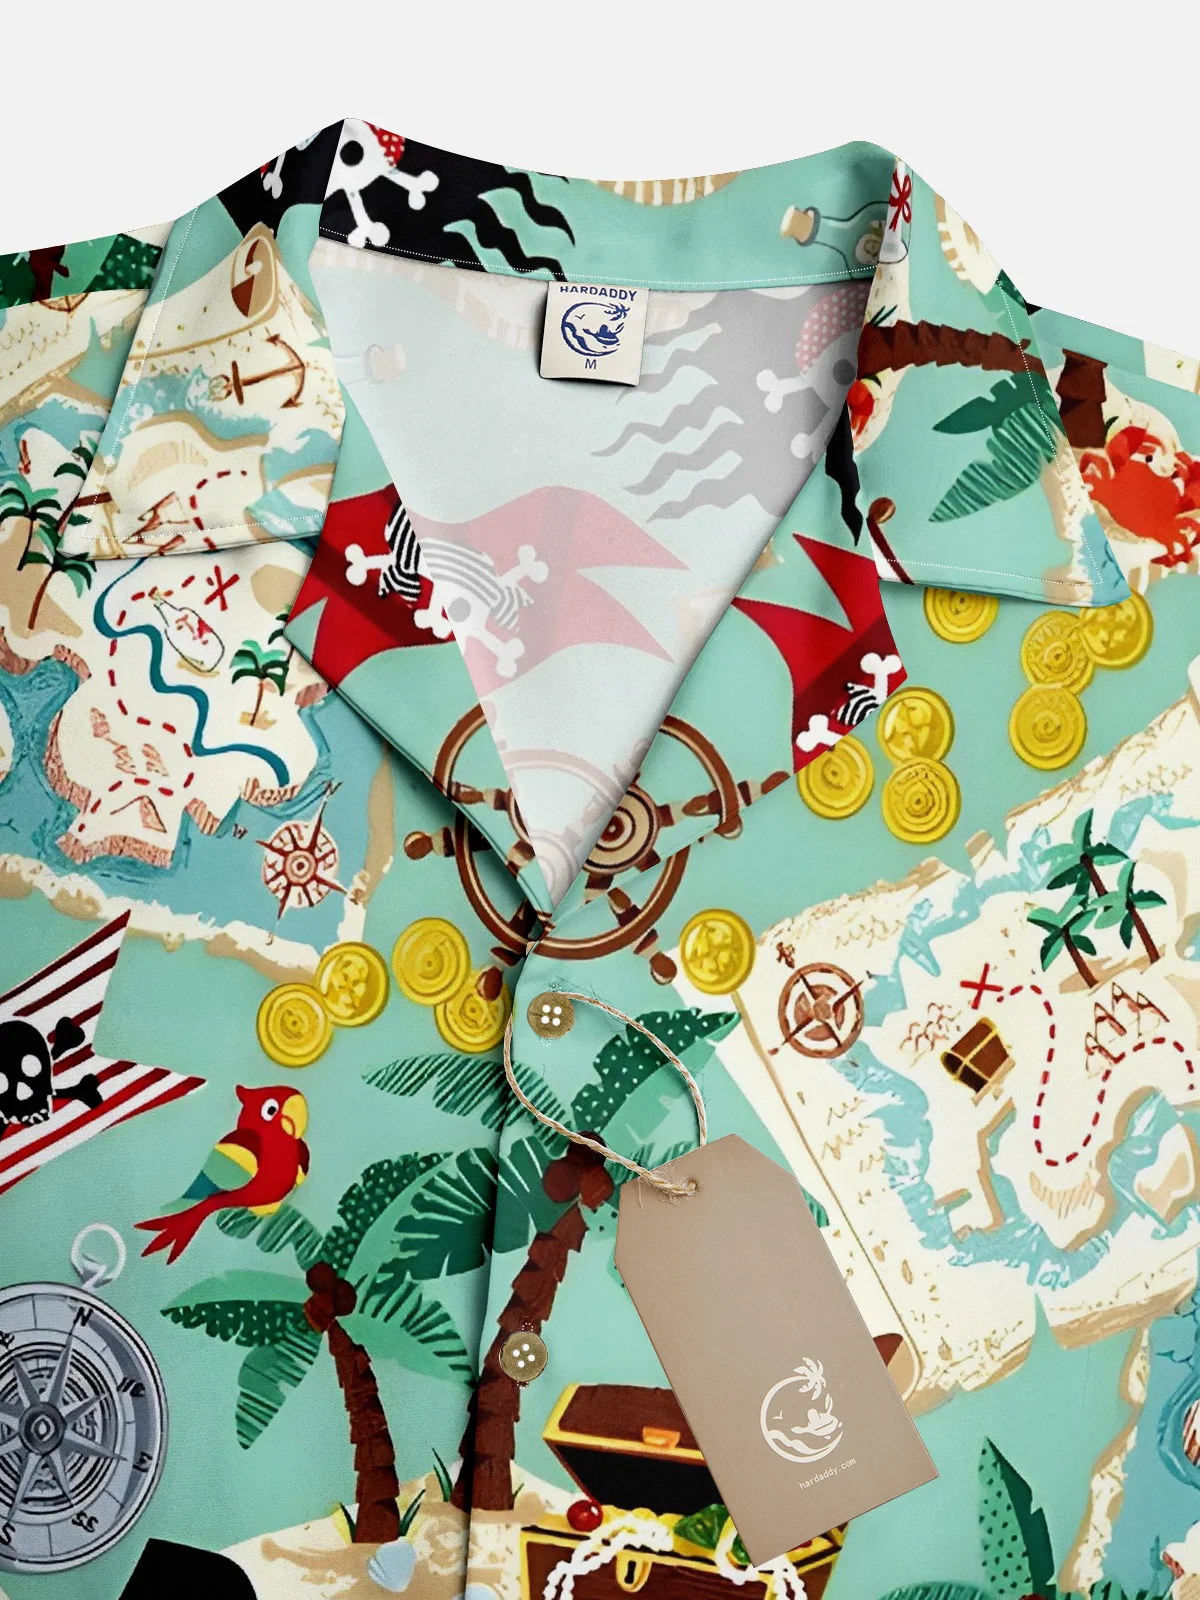 Hardaddy Moisture-wicking Pirate Map Coconut Tree Chest Pocket Hawaiian Shirt